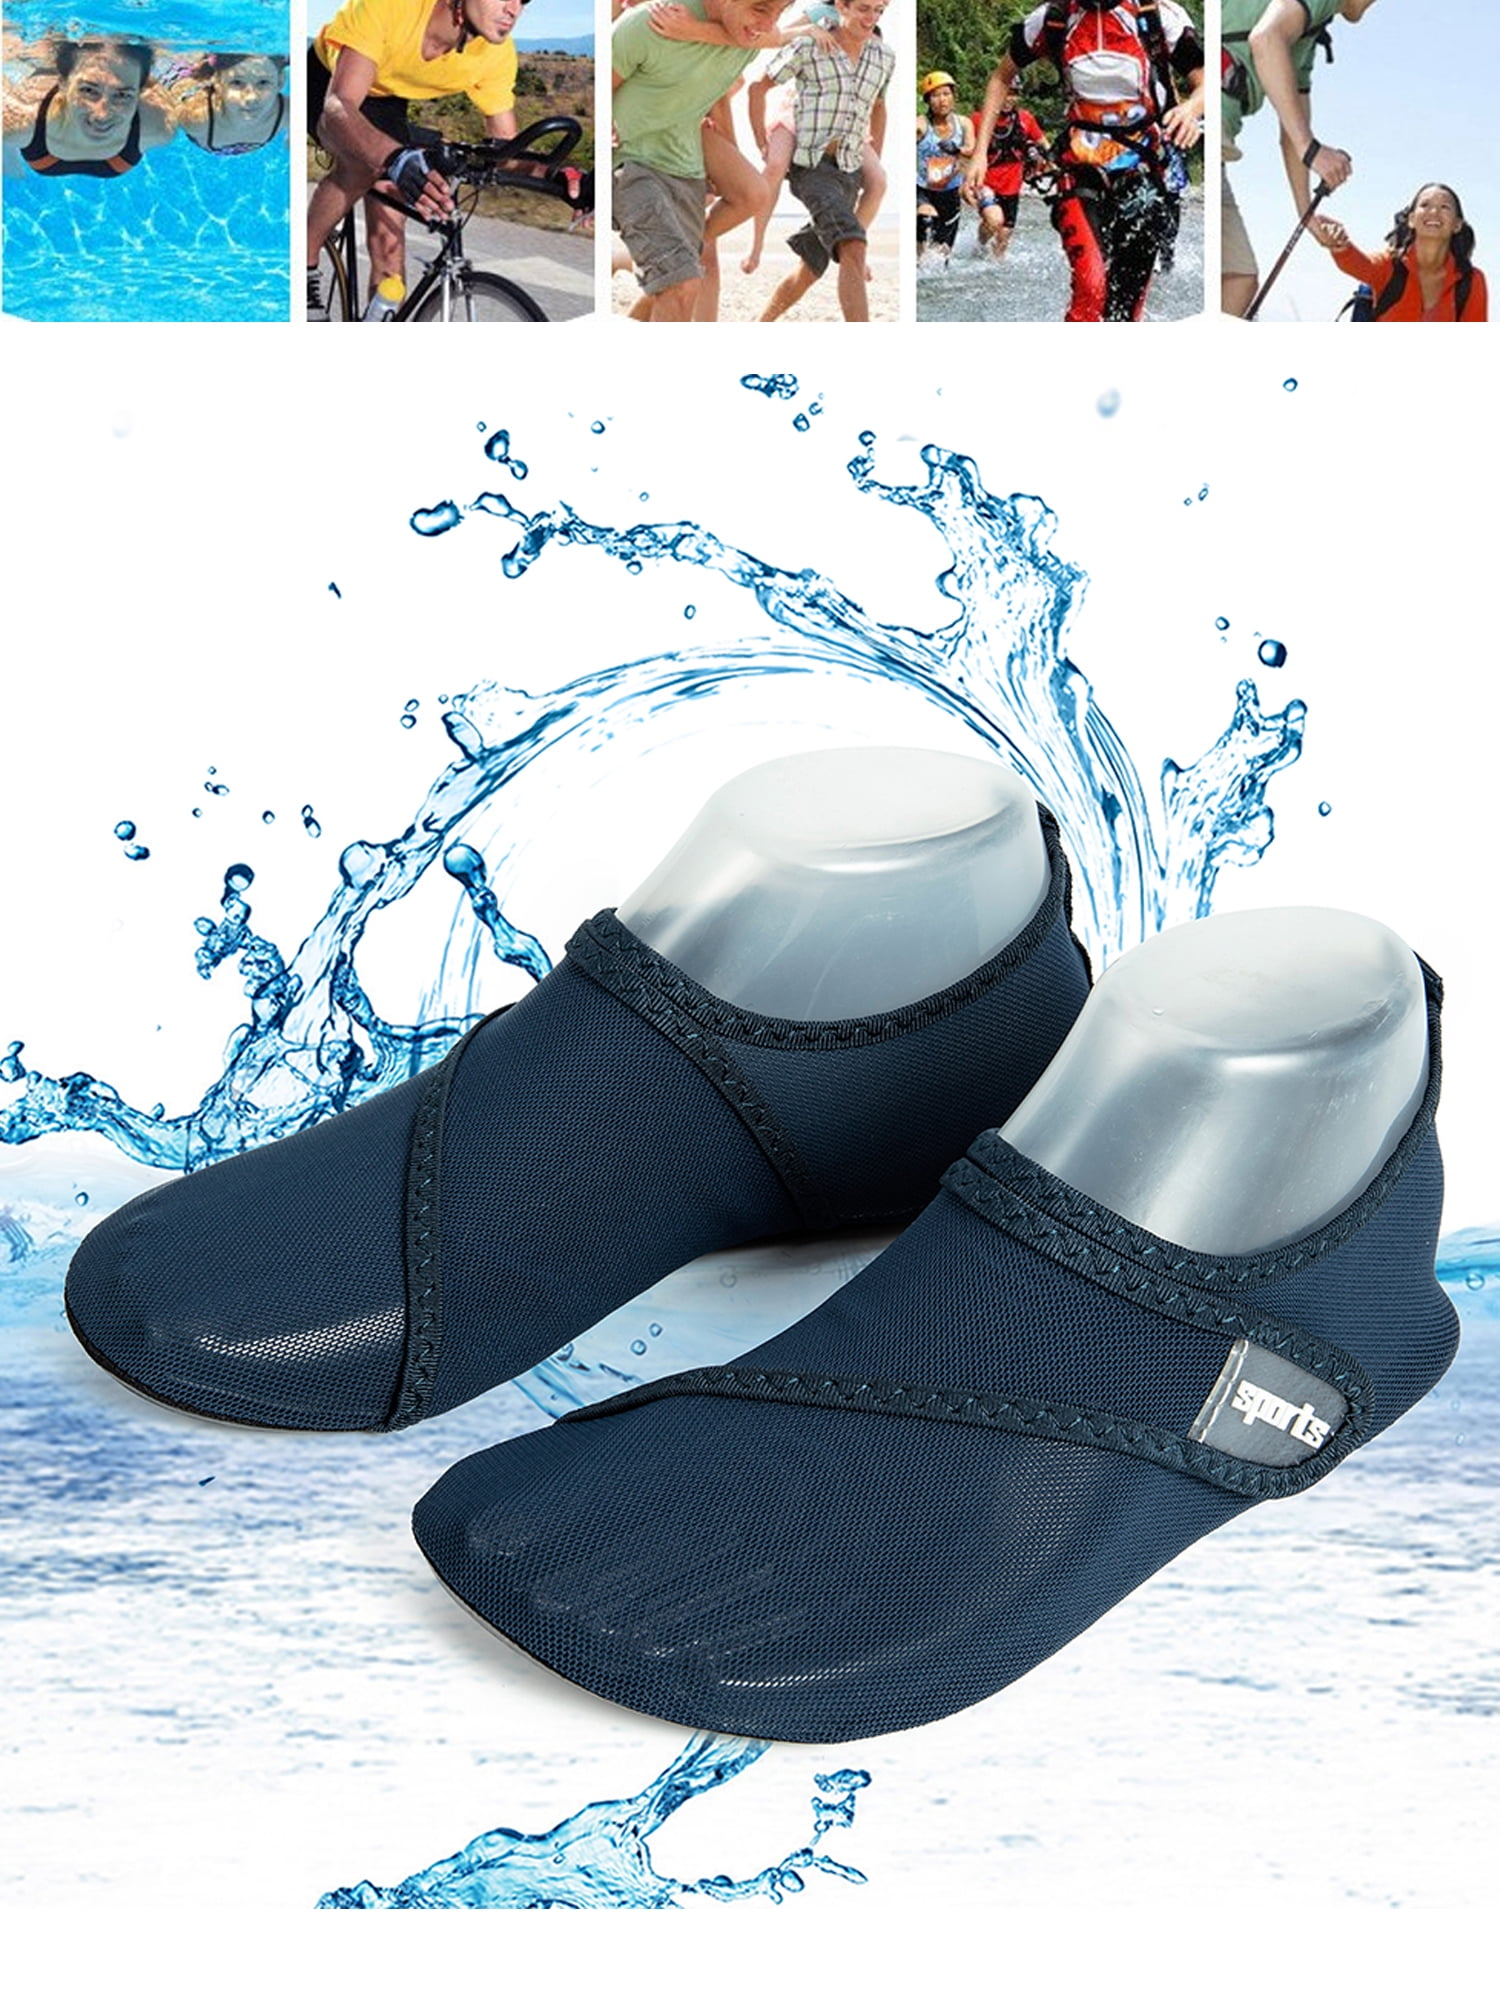 Skin Shoes Water Shoes Aqua Socks Exercise Yoga Pool Beach Swim Slip On Surf G 